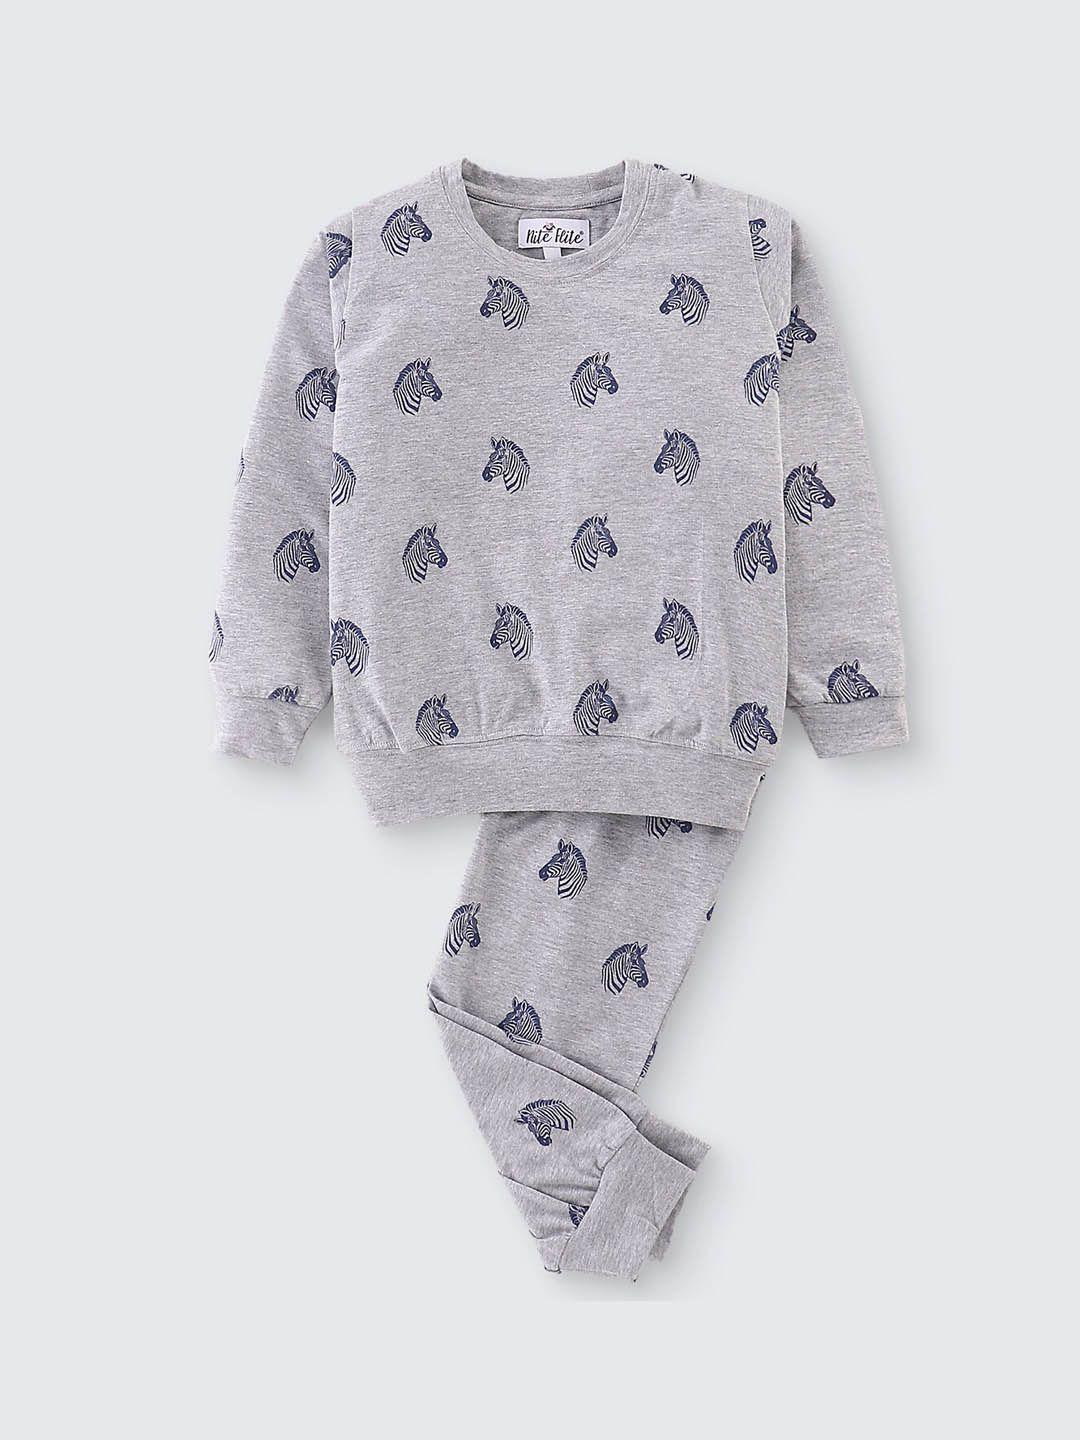 nite flite kids conversational printed pure cotton t-shirt & pyjamas night suit